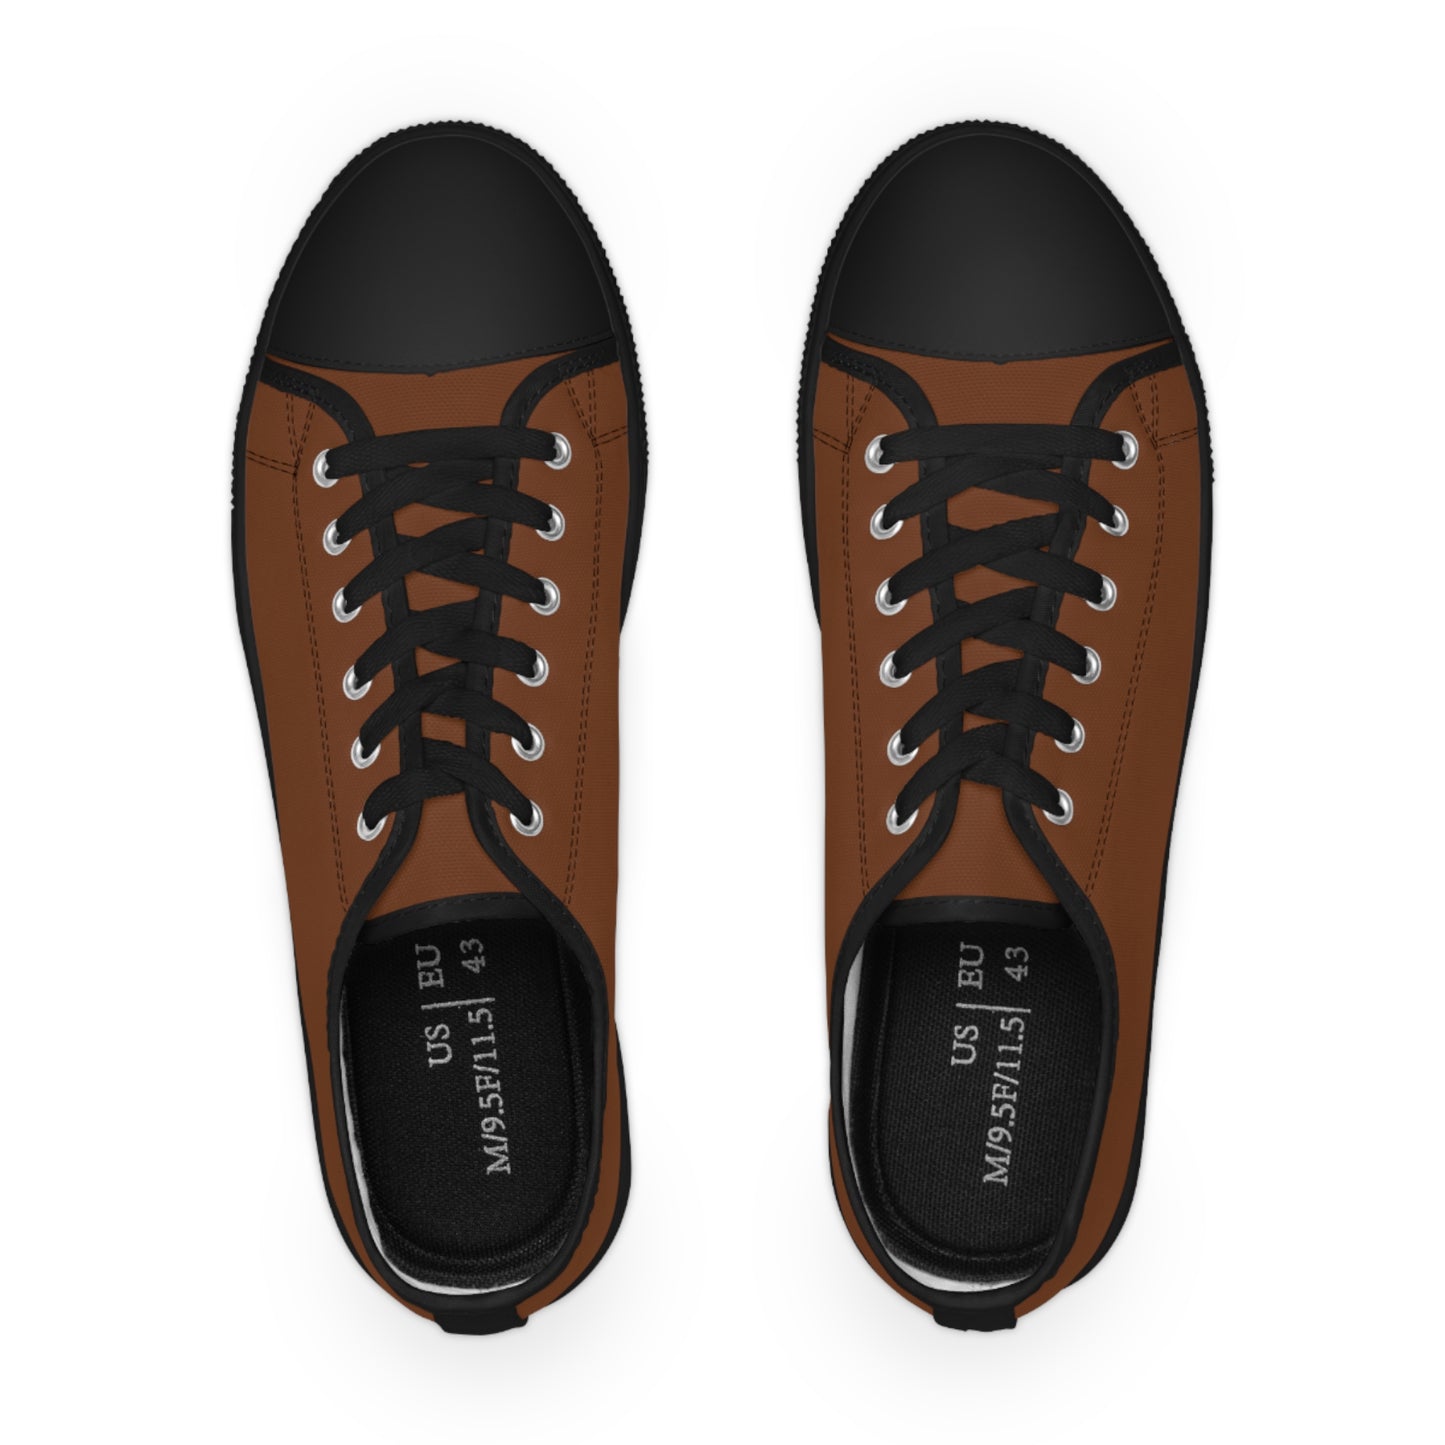 Men's Canvas Low Top Solid Color Sneakers - Rotten Orange US 14 Black sole